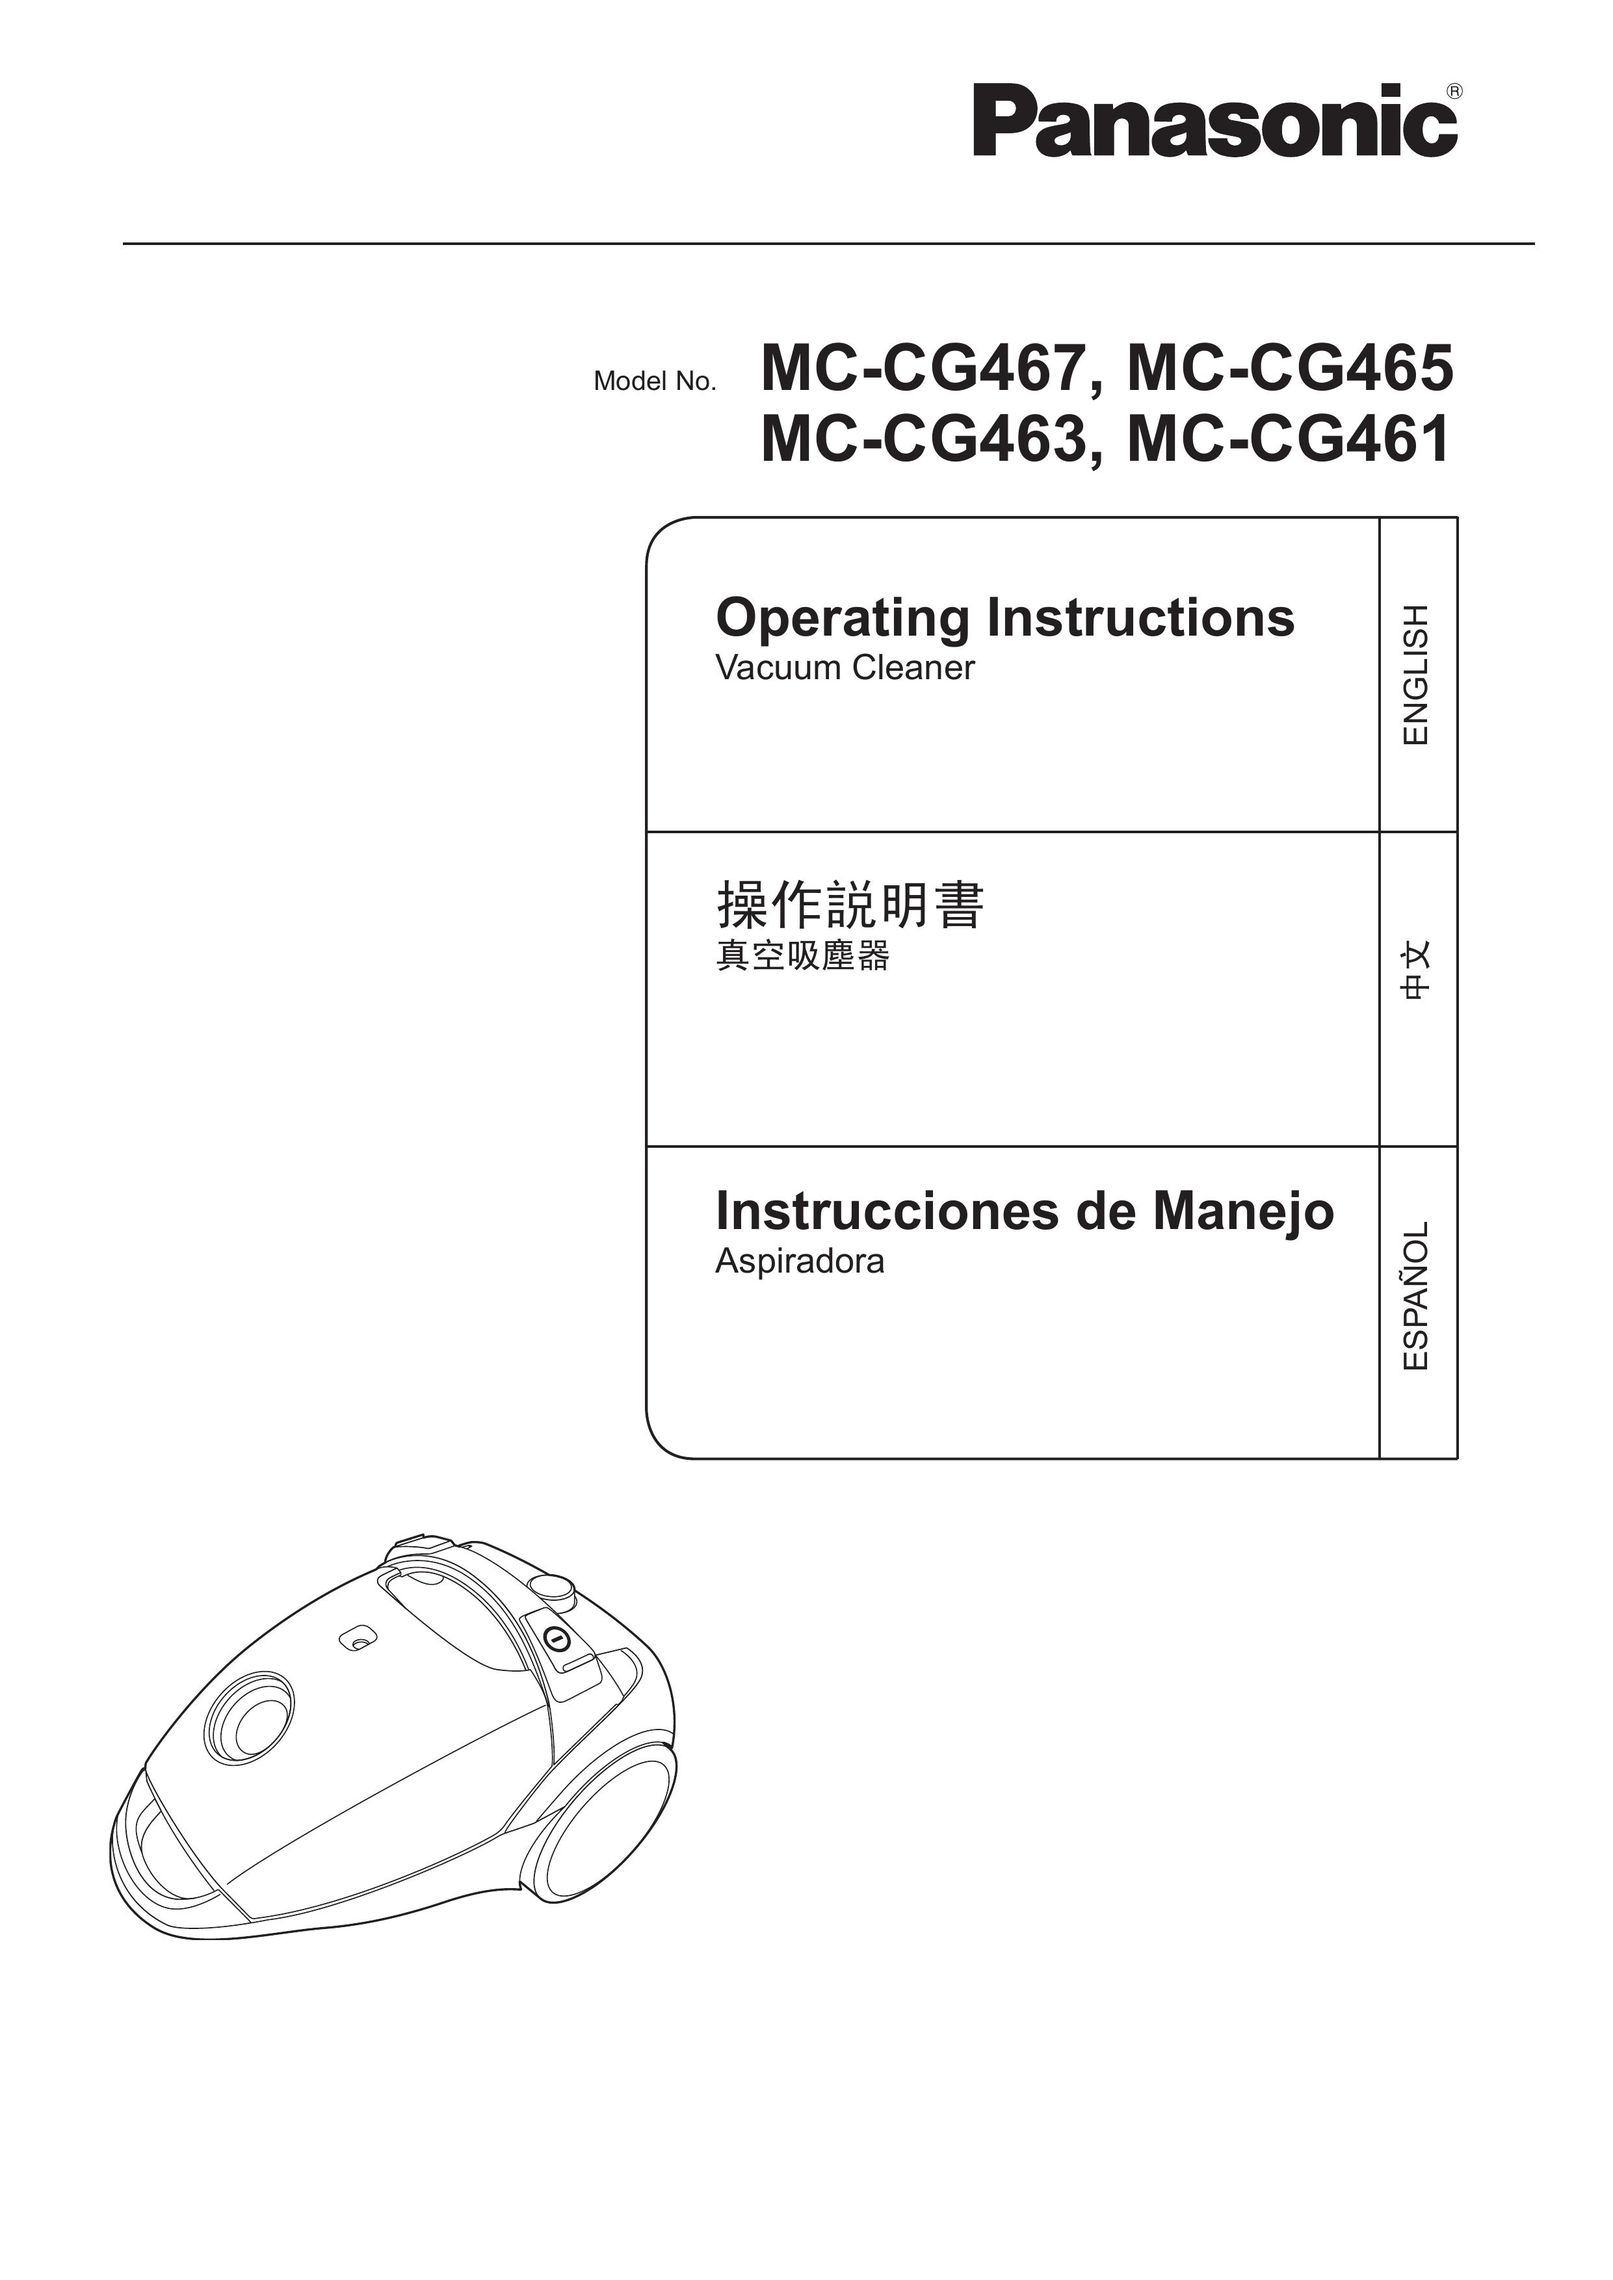 Panasonic MC-CG463 Vacuum Cleaner User Manual